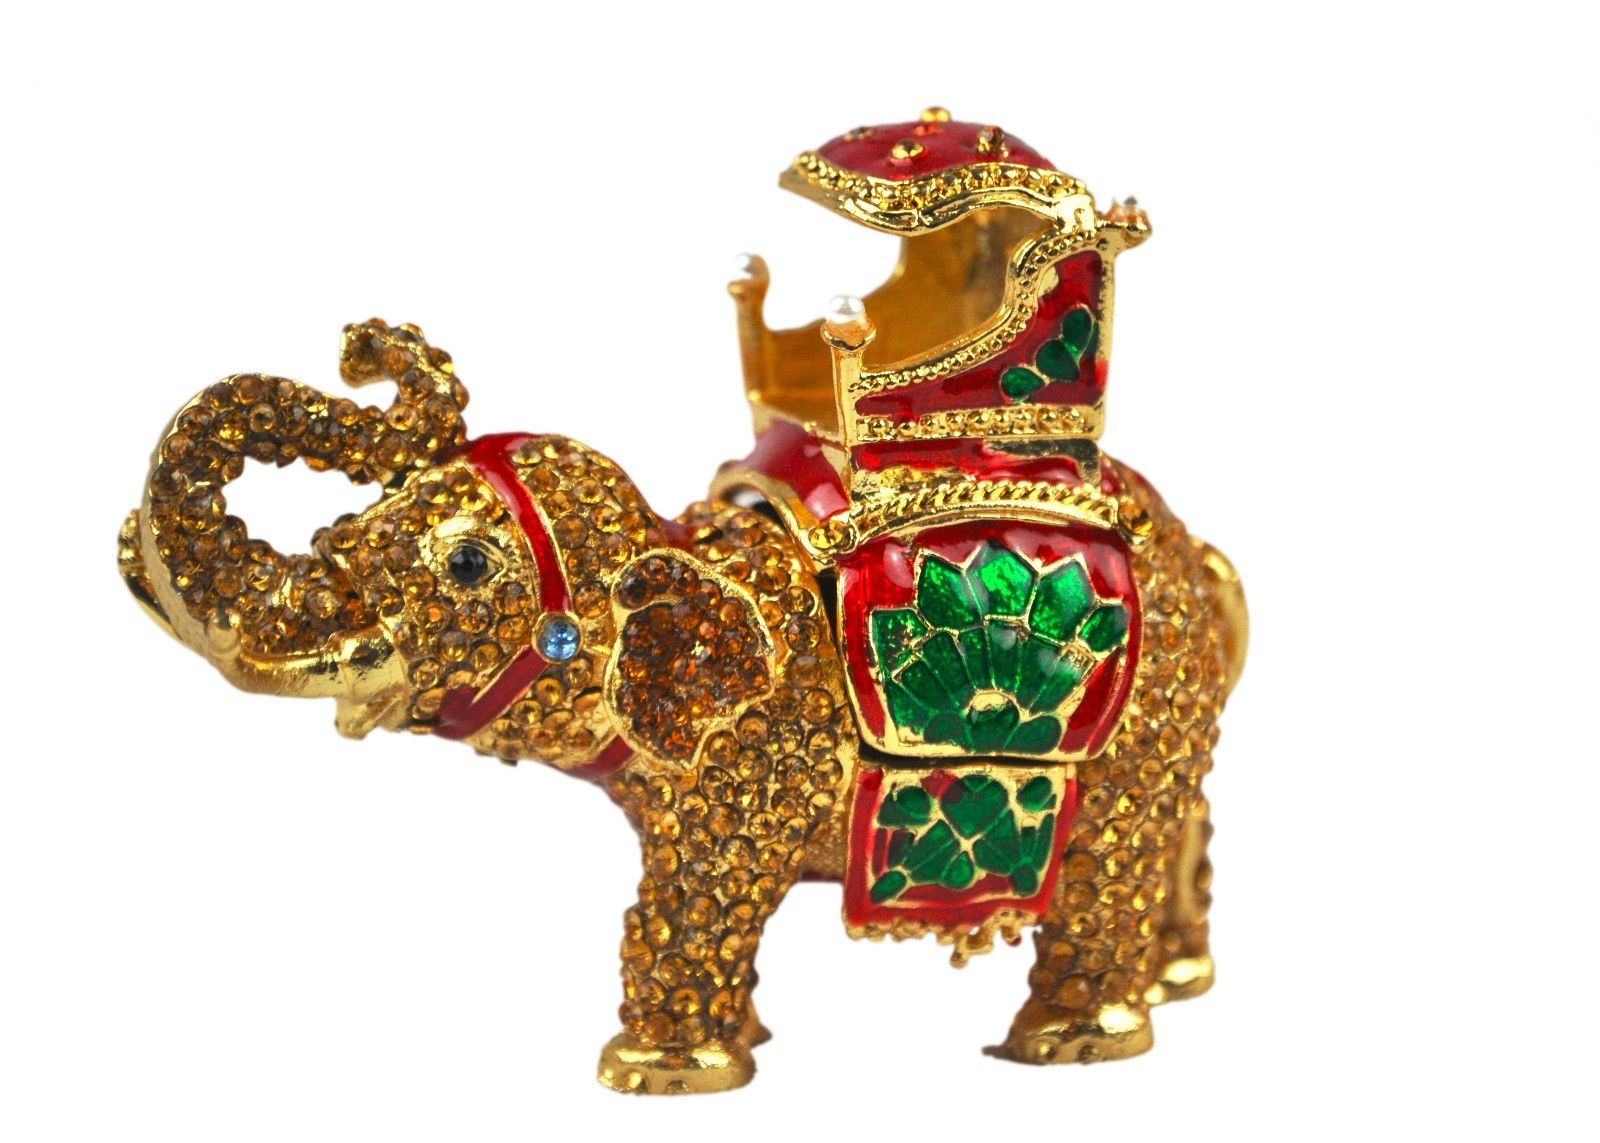 Decorative Small Elephant with Trinket Box I Pakistani Artisan Design I Decoration Piece Accent I Metal Stone Decor